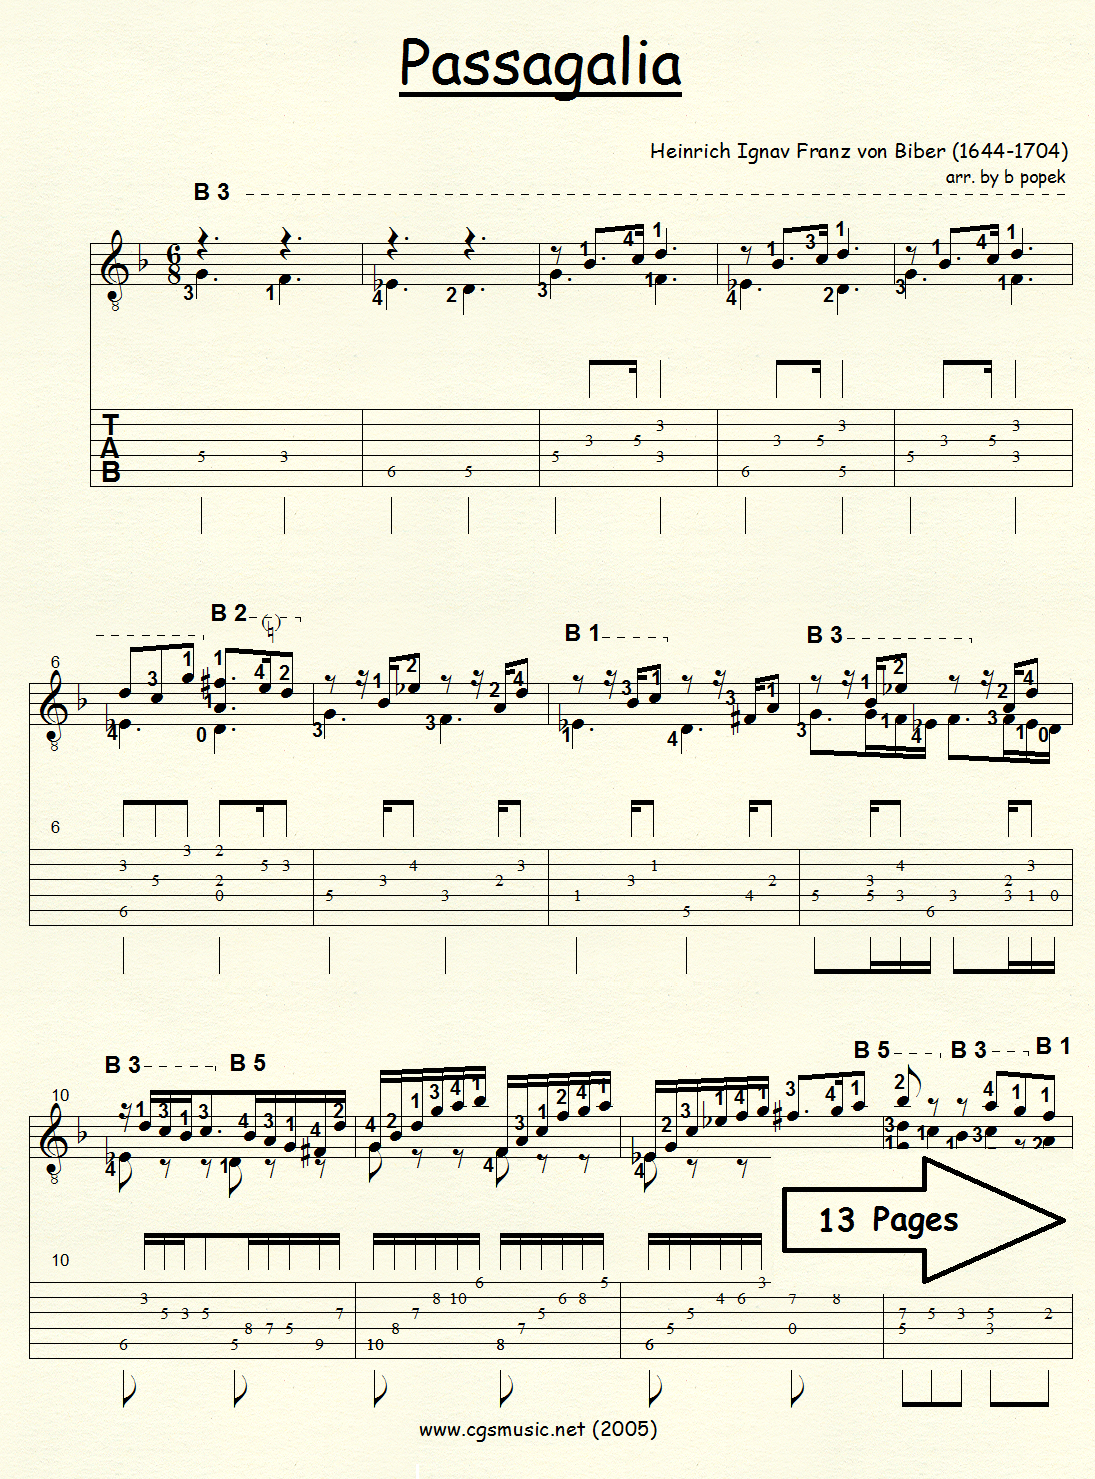 Passagalia (Biber) for Classical Guitar in Tablature